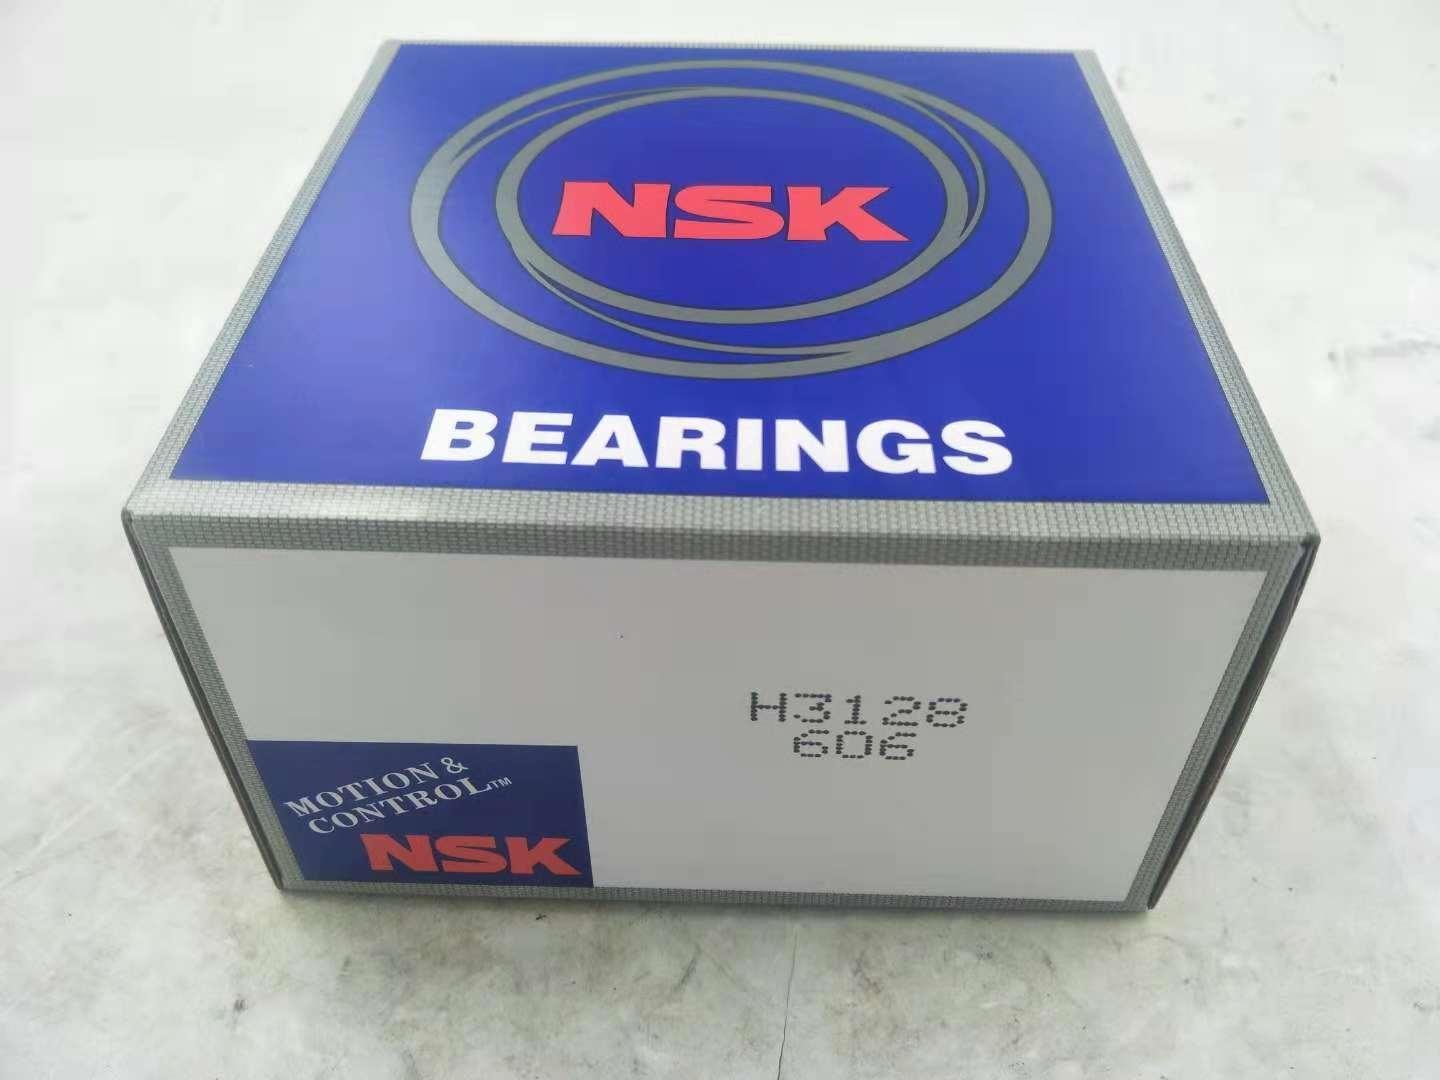 NSK   H3128   Adapter Sleeves 2